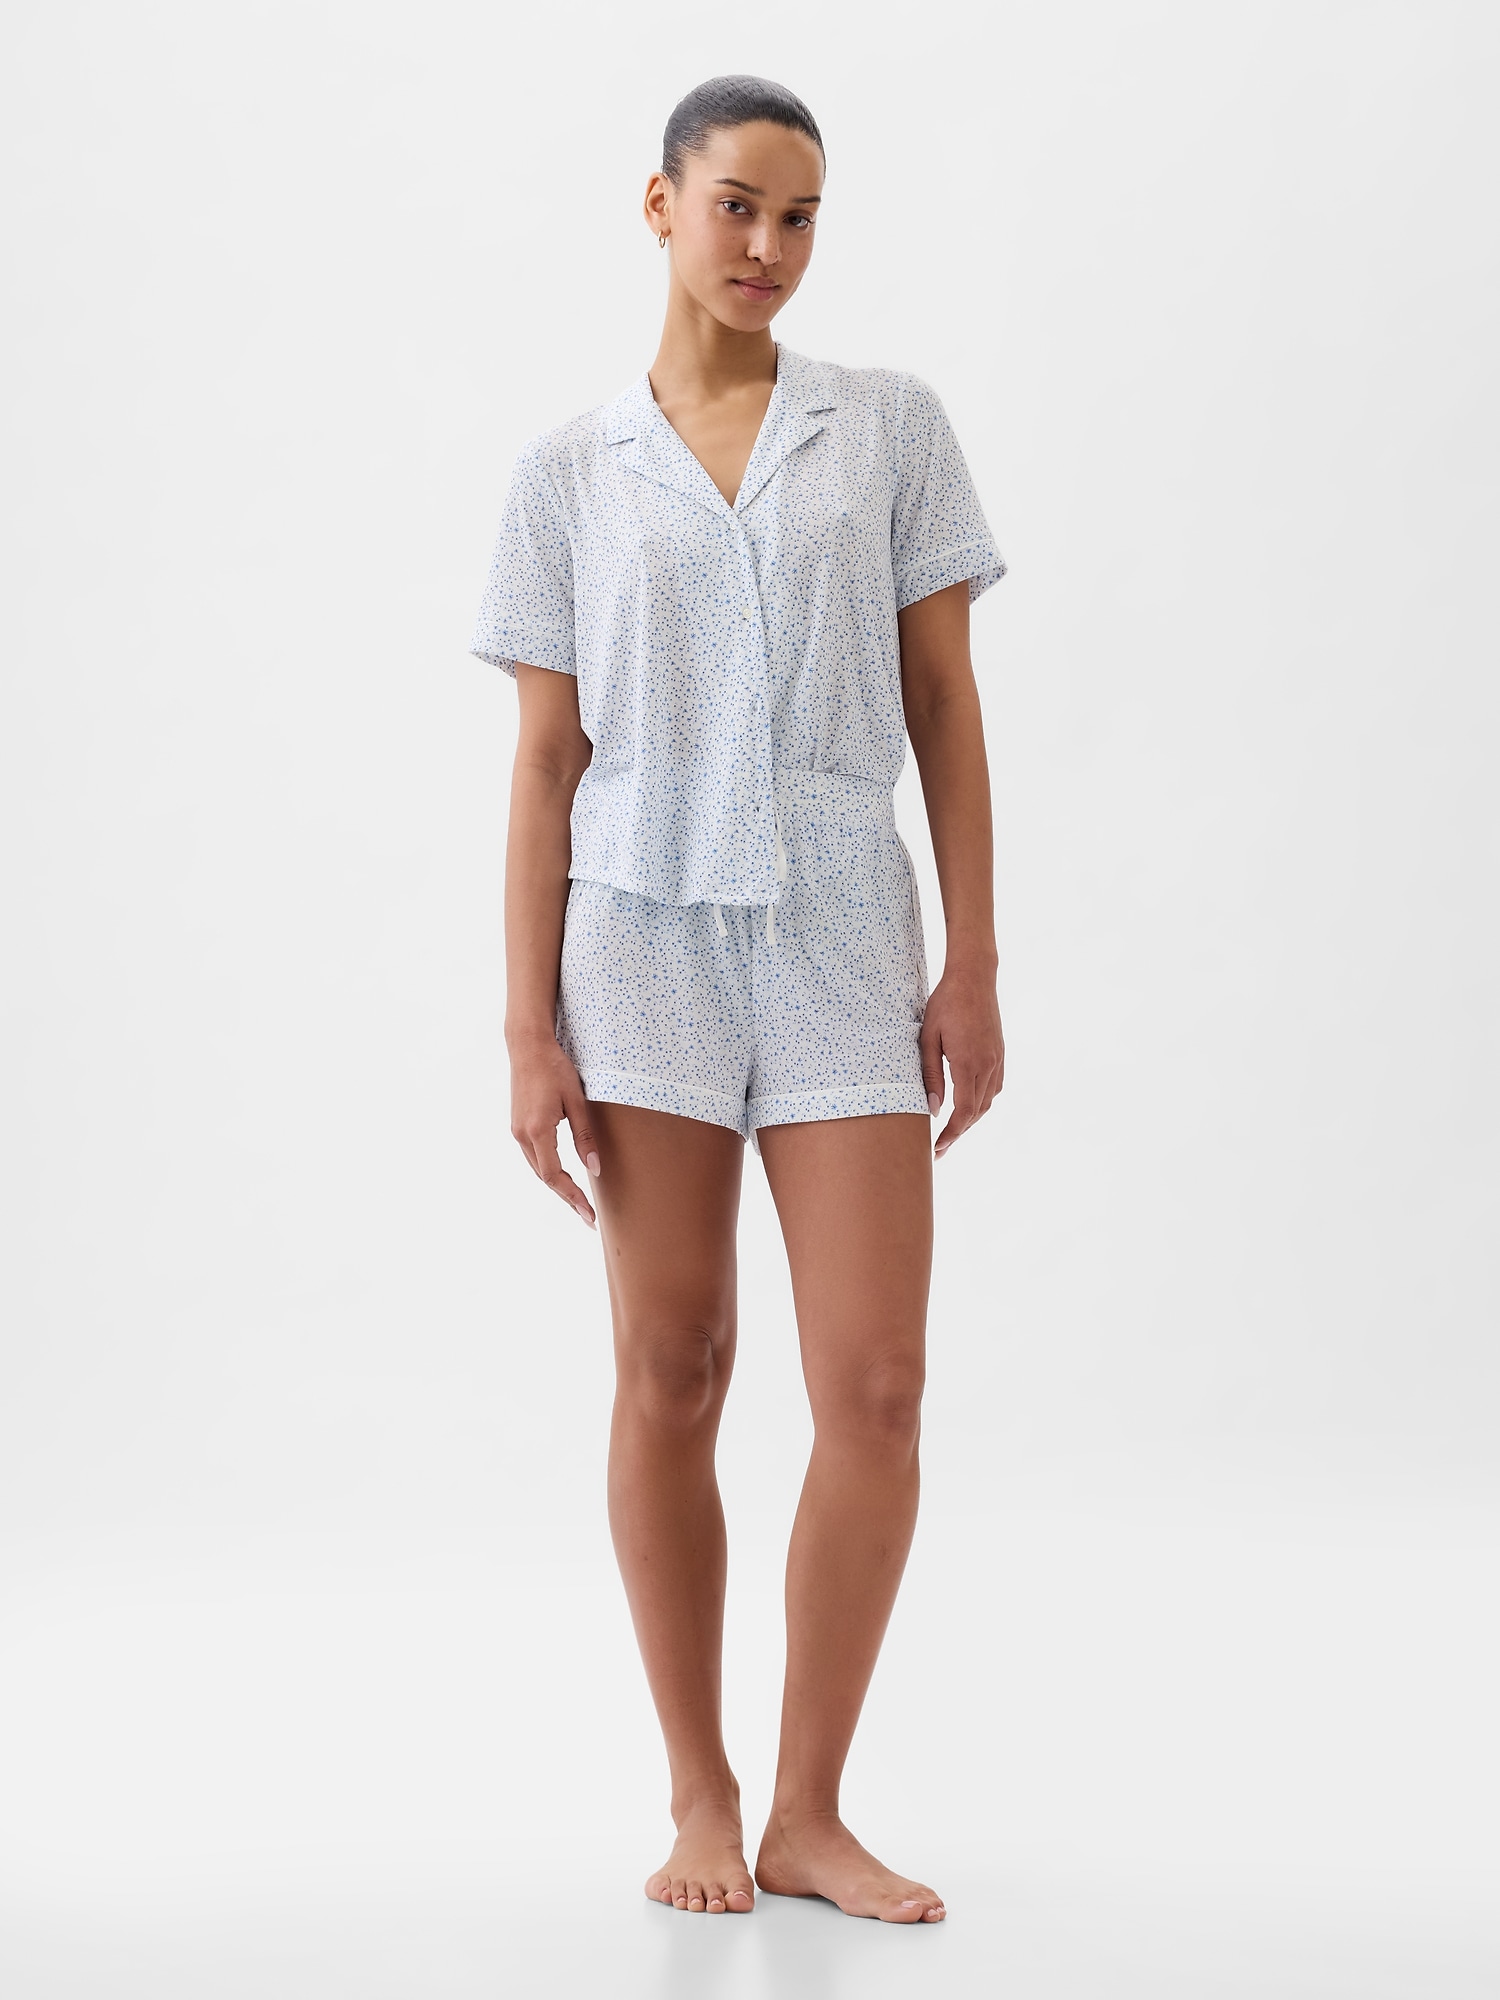 Gap Modal Pajama Shorts In White Blue Floral